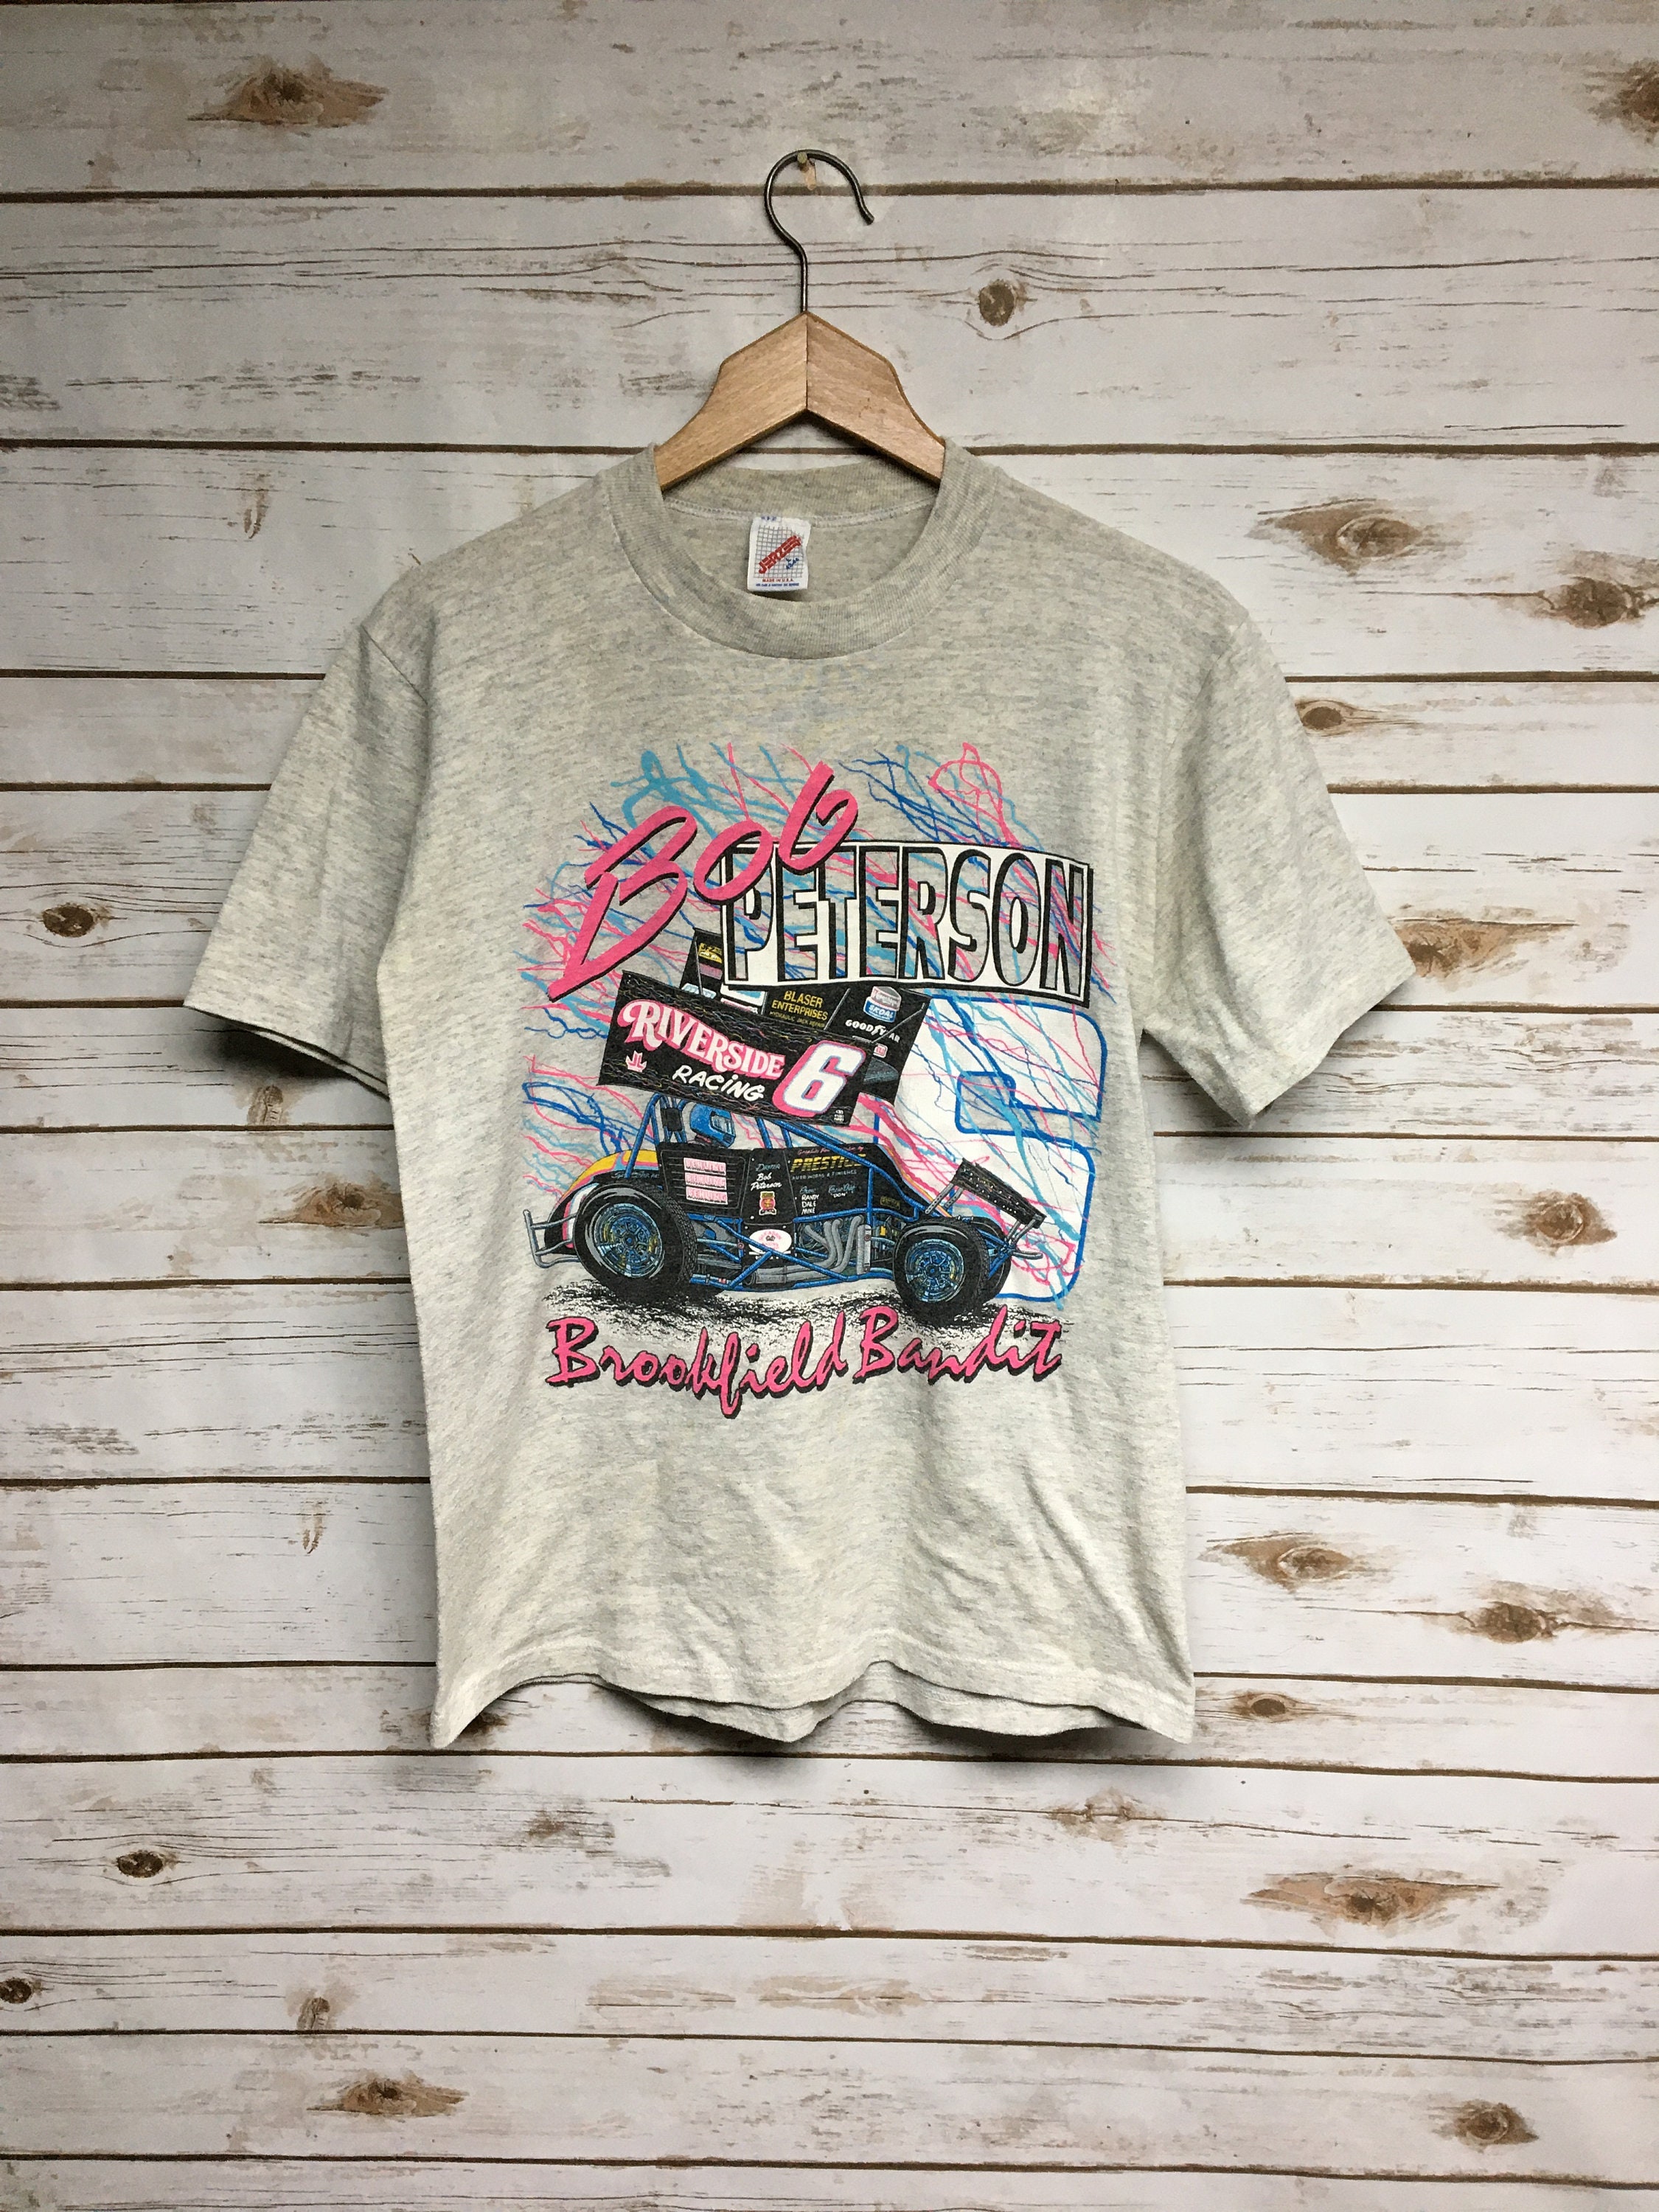 Vintage 90's Jerzees Tri Blend Bob Peterson Racing T Shirt Heather Grey Rayon Made in Usa Brookfield Bandit - Small/Medium